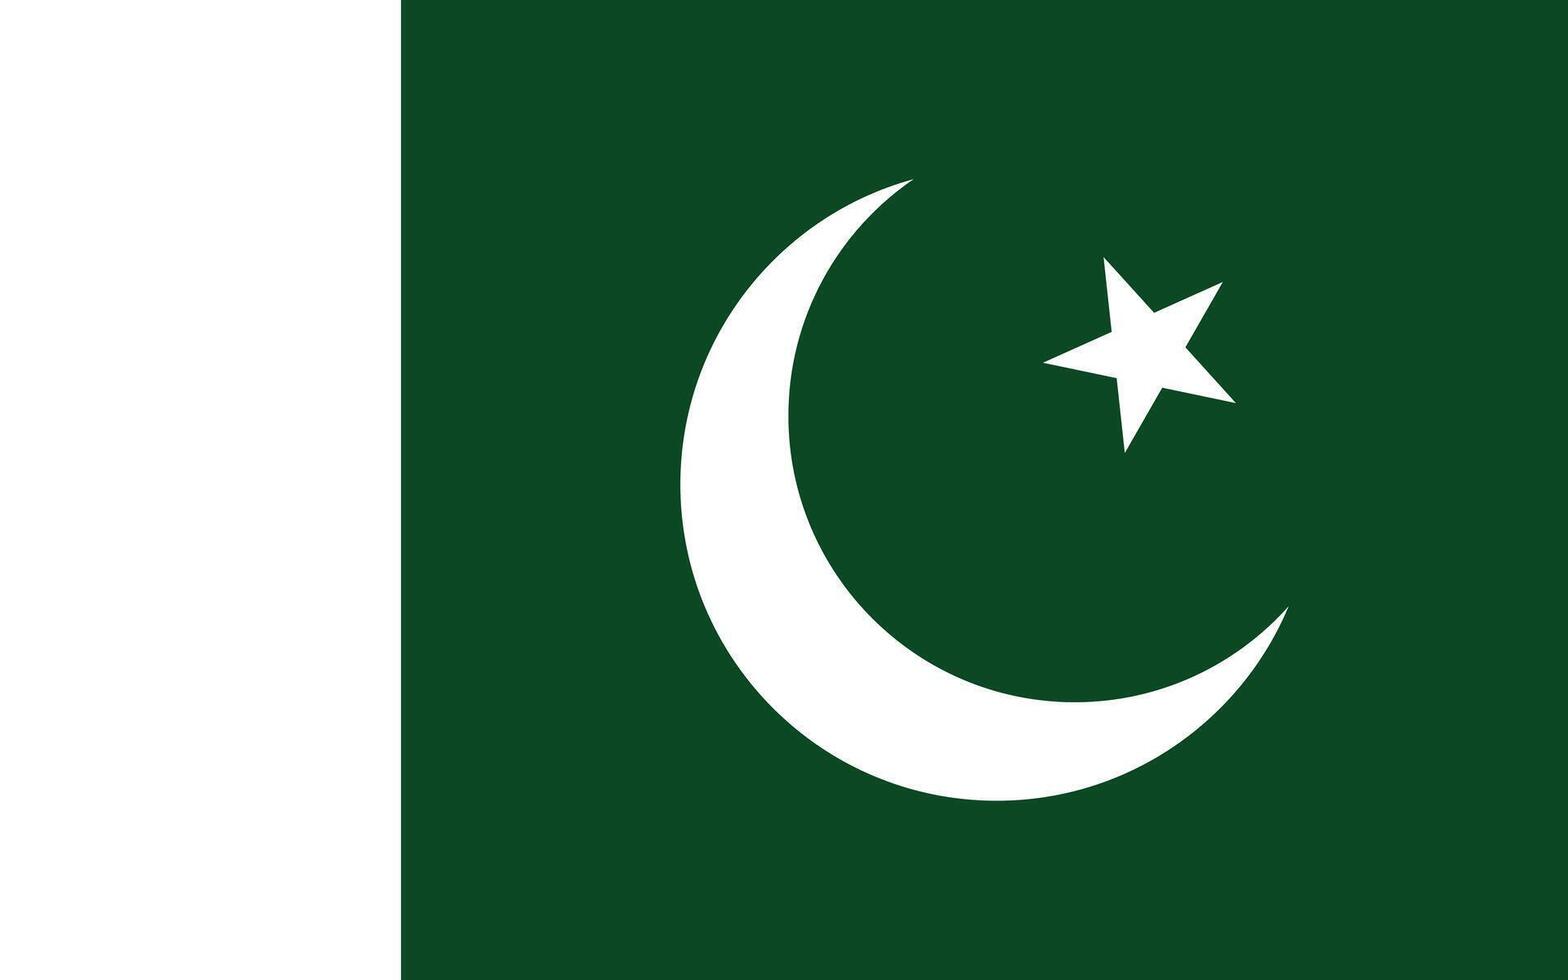 Pakistan flag illustration. Pakistan national flag. Waving Pakistan flag.Pakistan flag illustration. Pakistan national flag. Waving Pakistan flag. vector